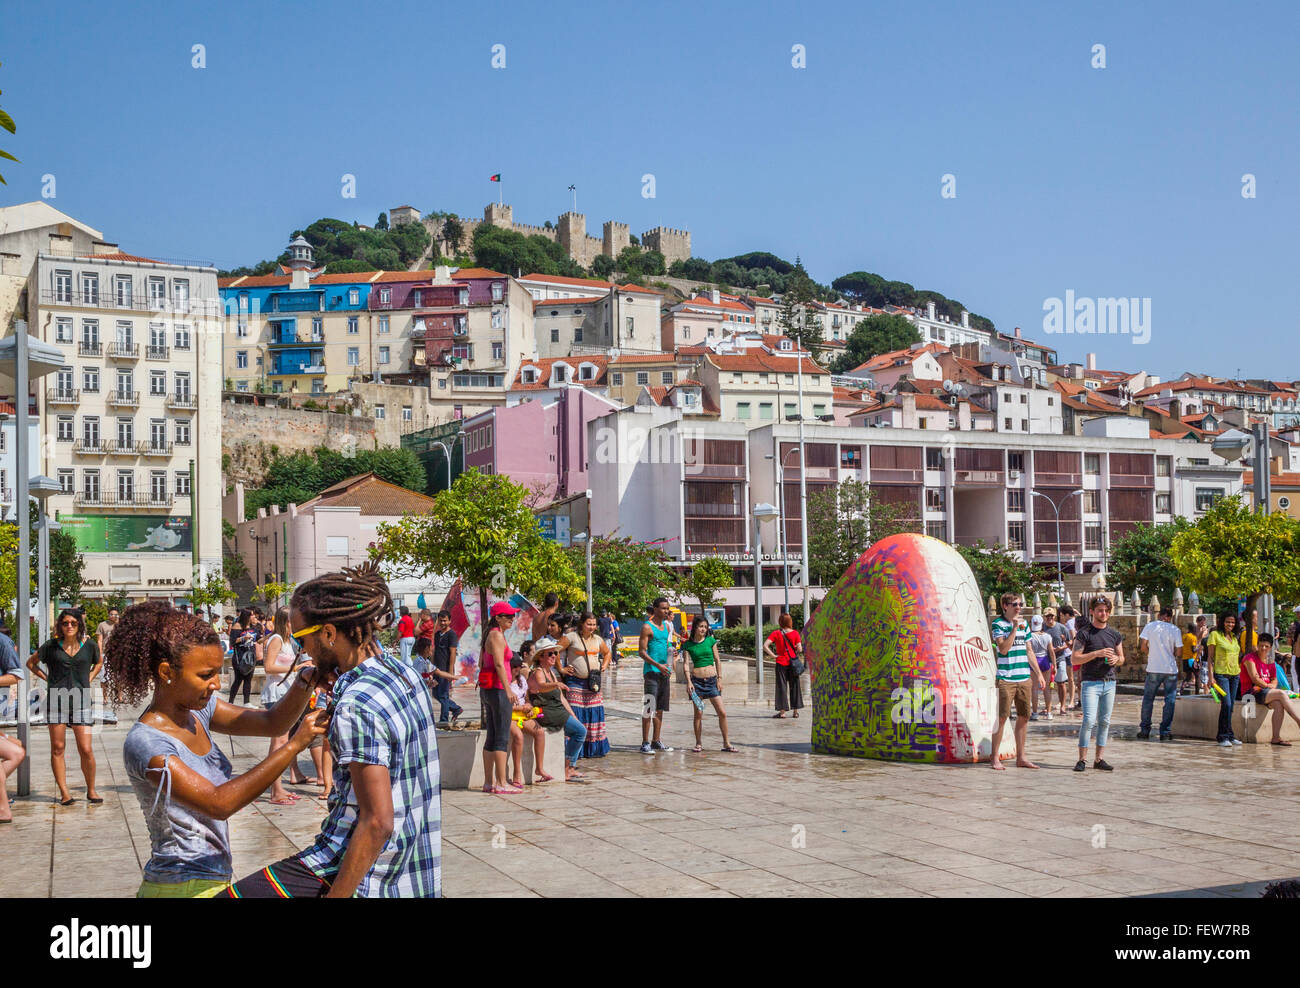 Portugal, Lisbon, Largo Martim Moniz is a popular meeting place below the hilltop fortification Castelo de Sao Jorge Stock Photo